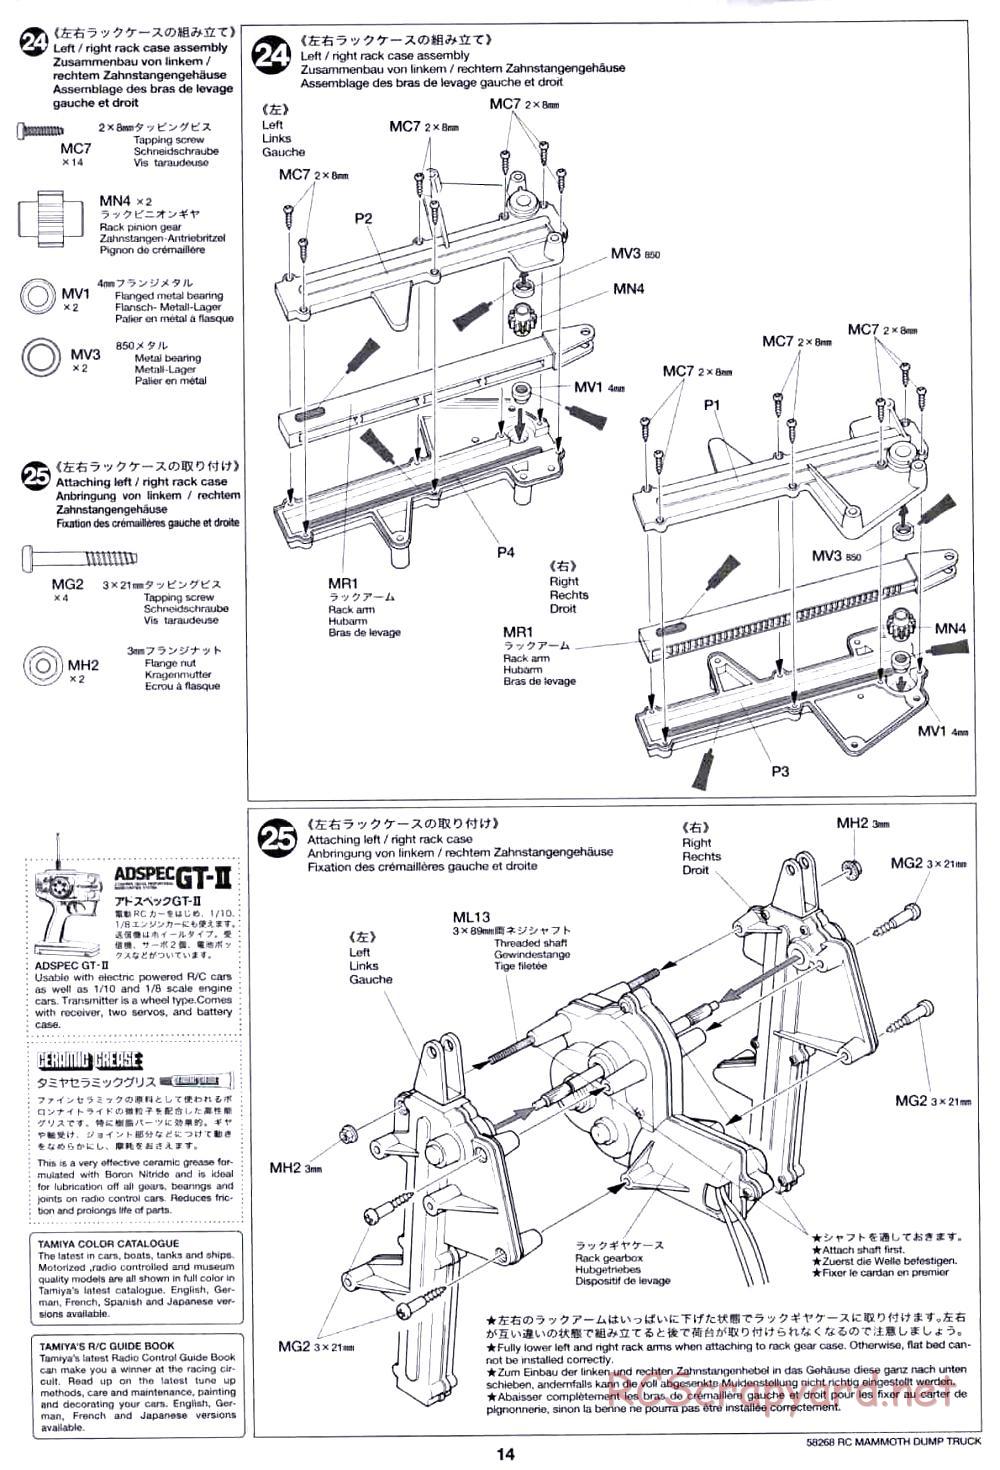 Tamiya - Mammoth Dump Truck Chassis - Manual - Page 14